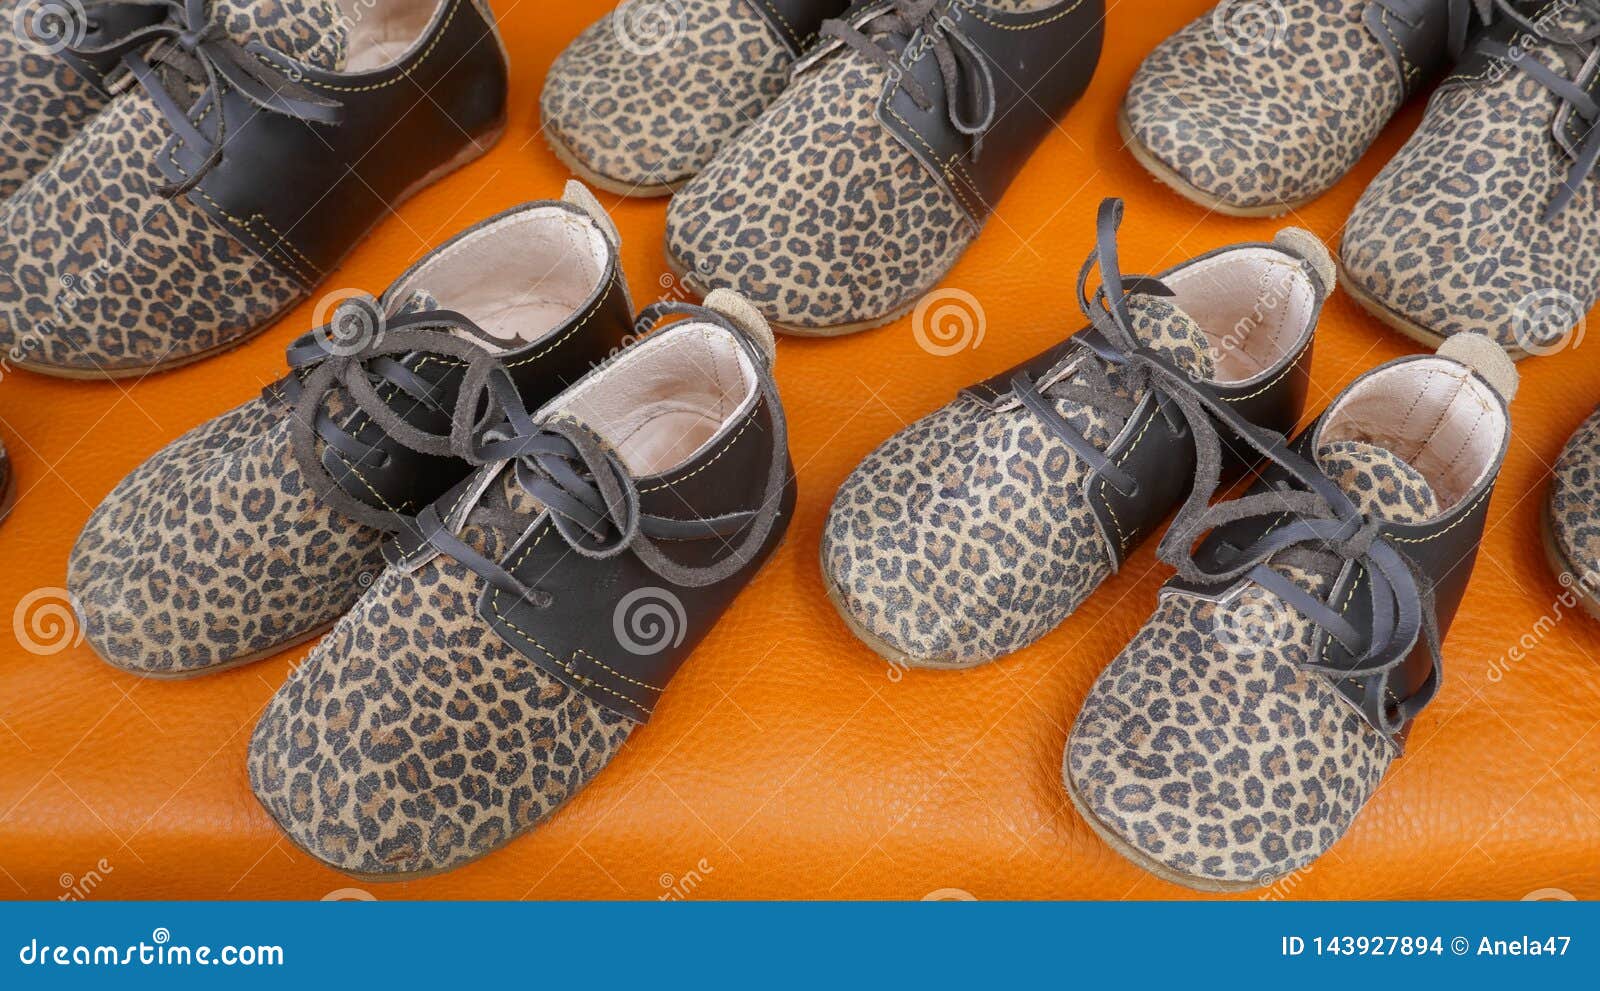 little girl leopard shoes